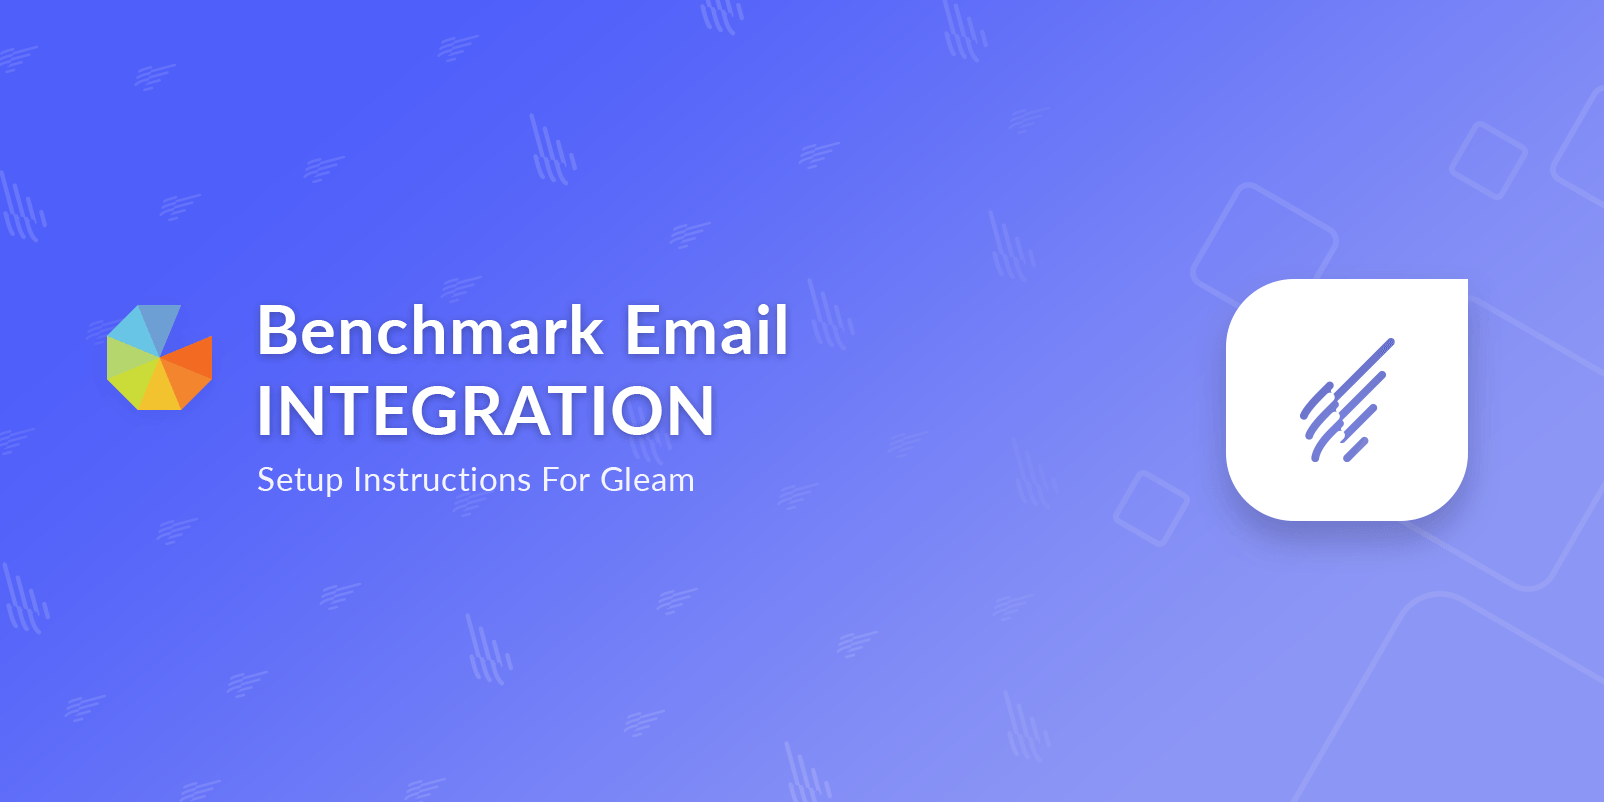 Benchmark Email intergration setup intructions for Gleam